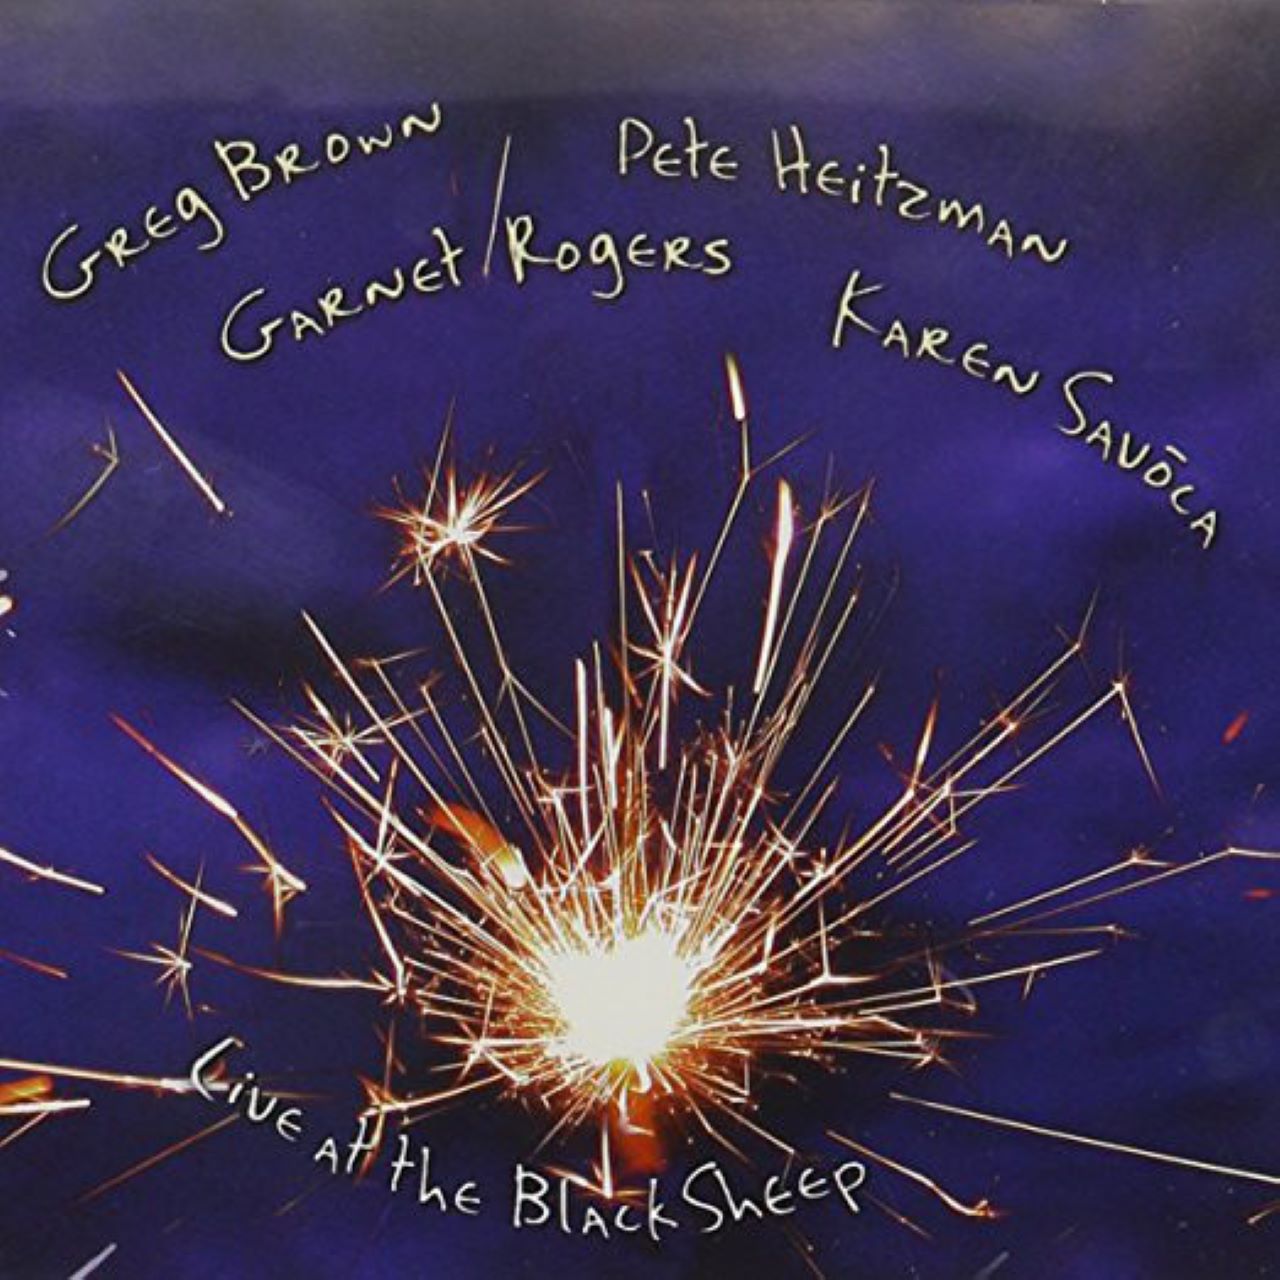 Greg Brown, Pete Heitzman, Garnet Rogers, Karen Savoca - Live At The Black Sheep cover album